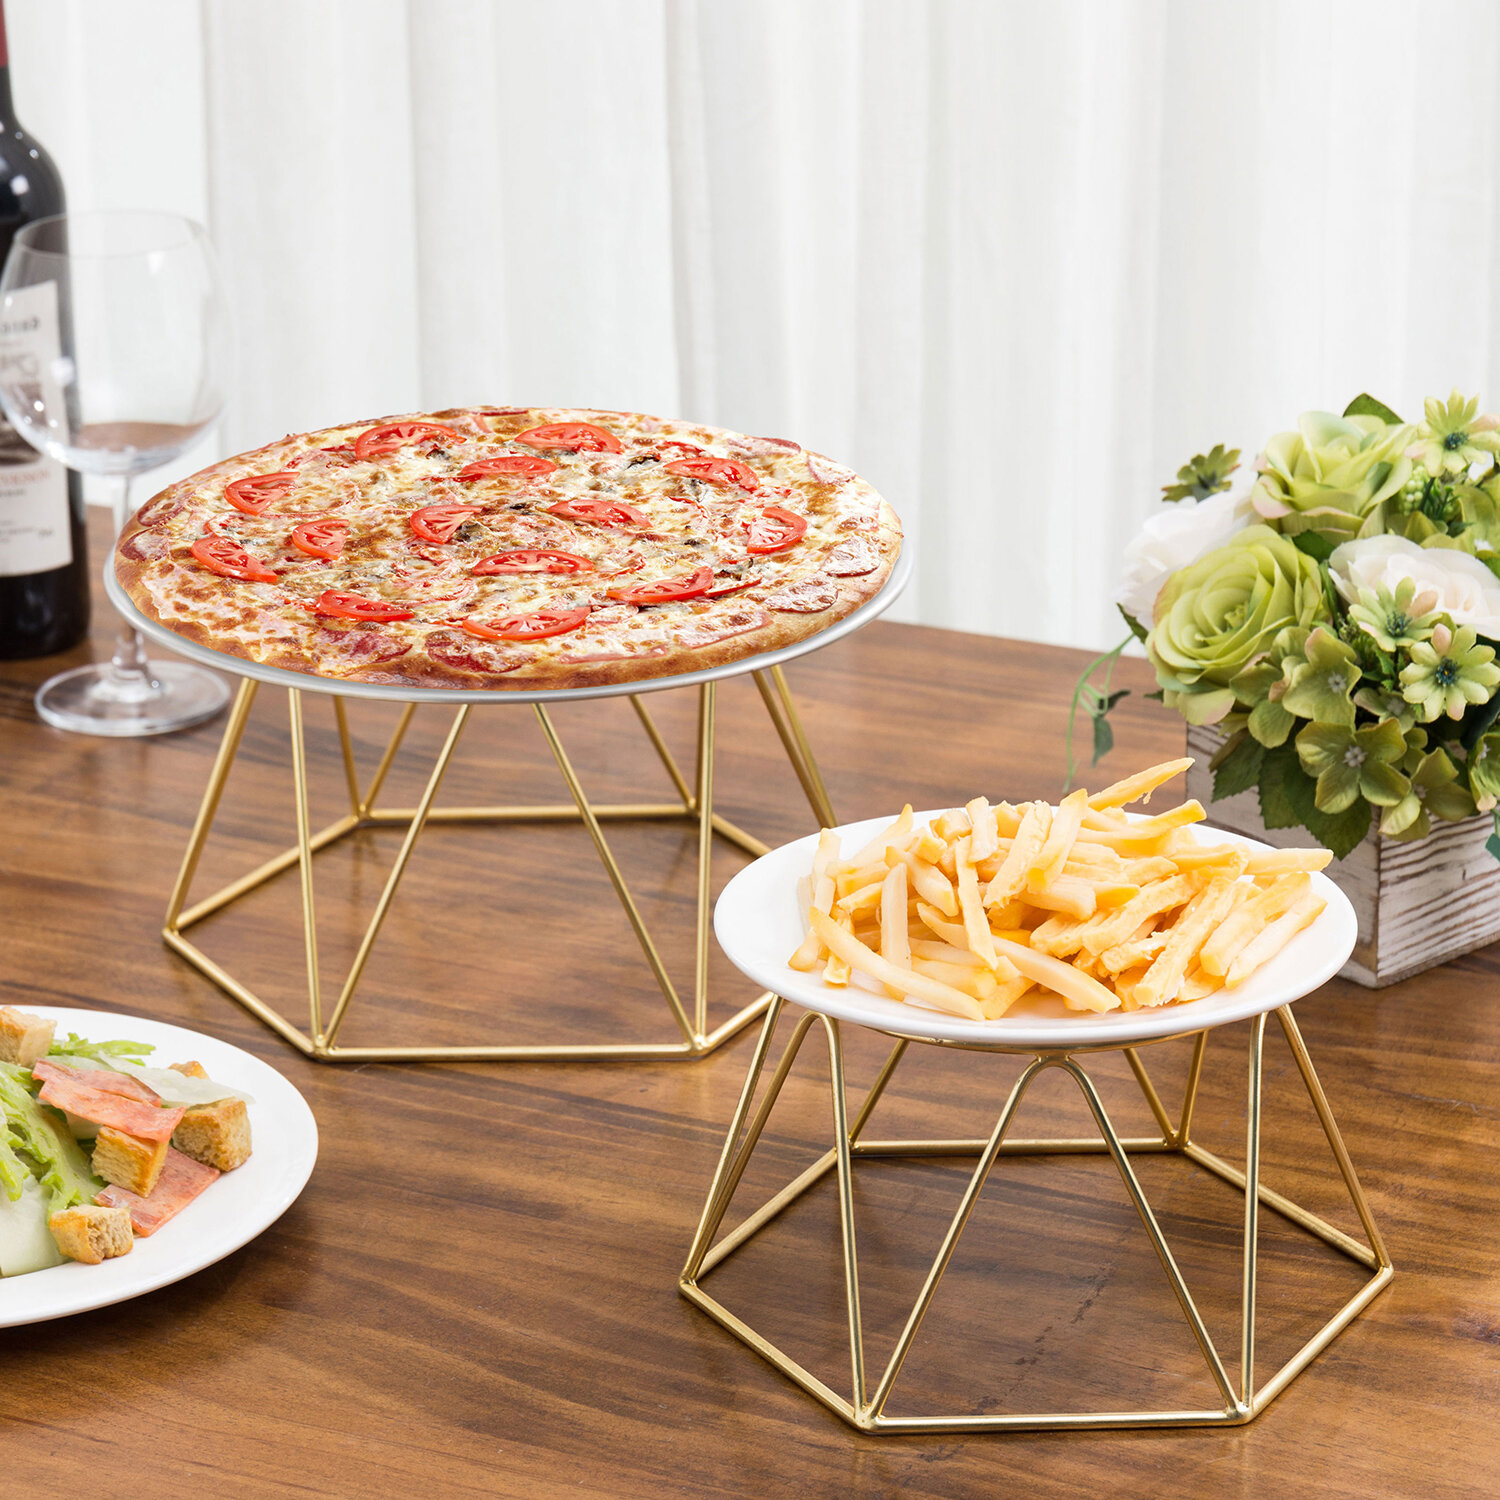 Set of 4 Metal Pizza Pan Riser Stands, Tabletop Food Platter Tray